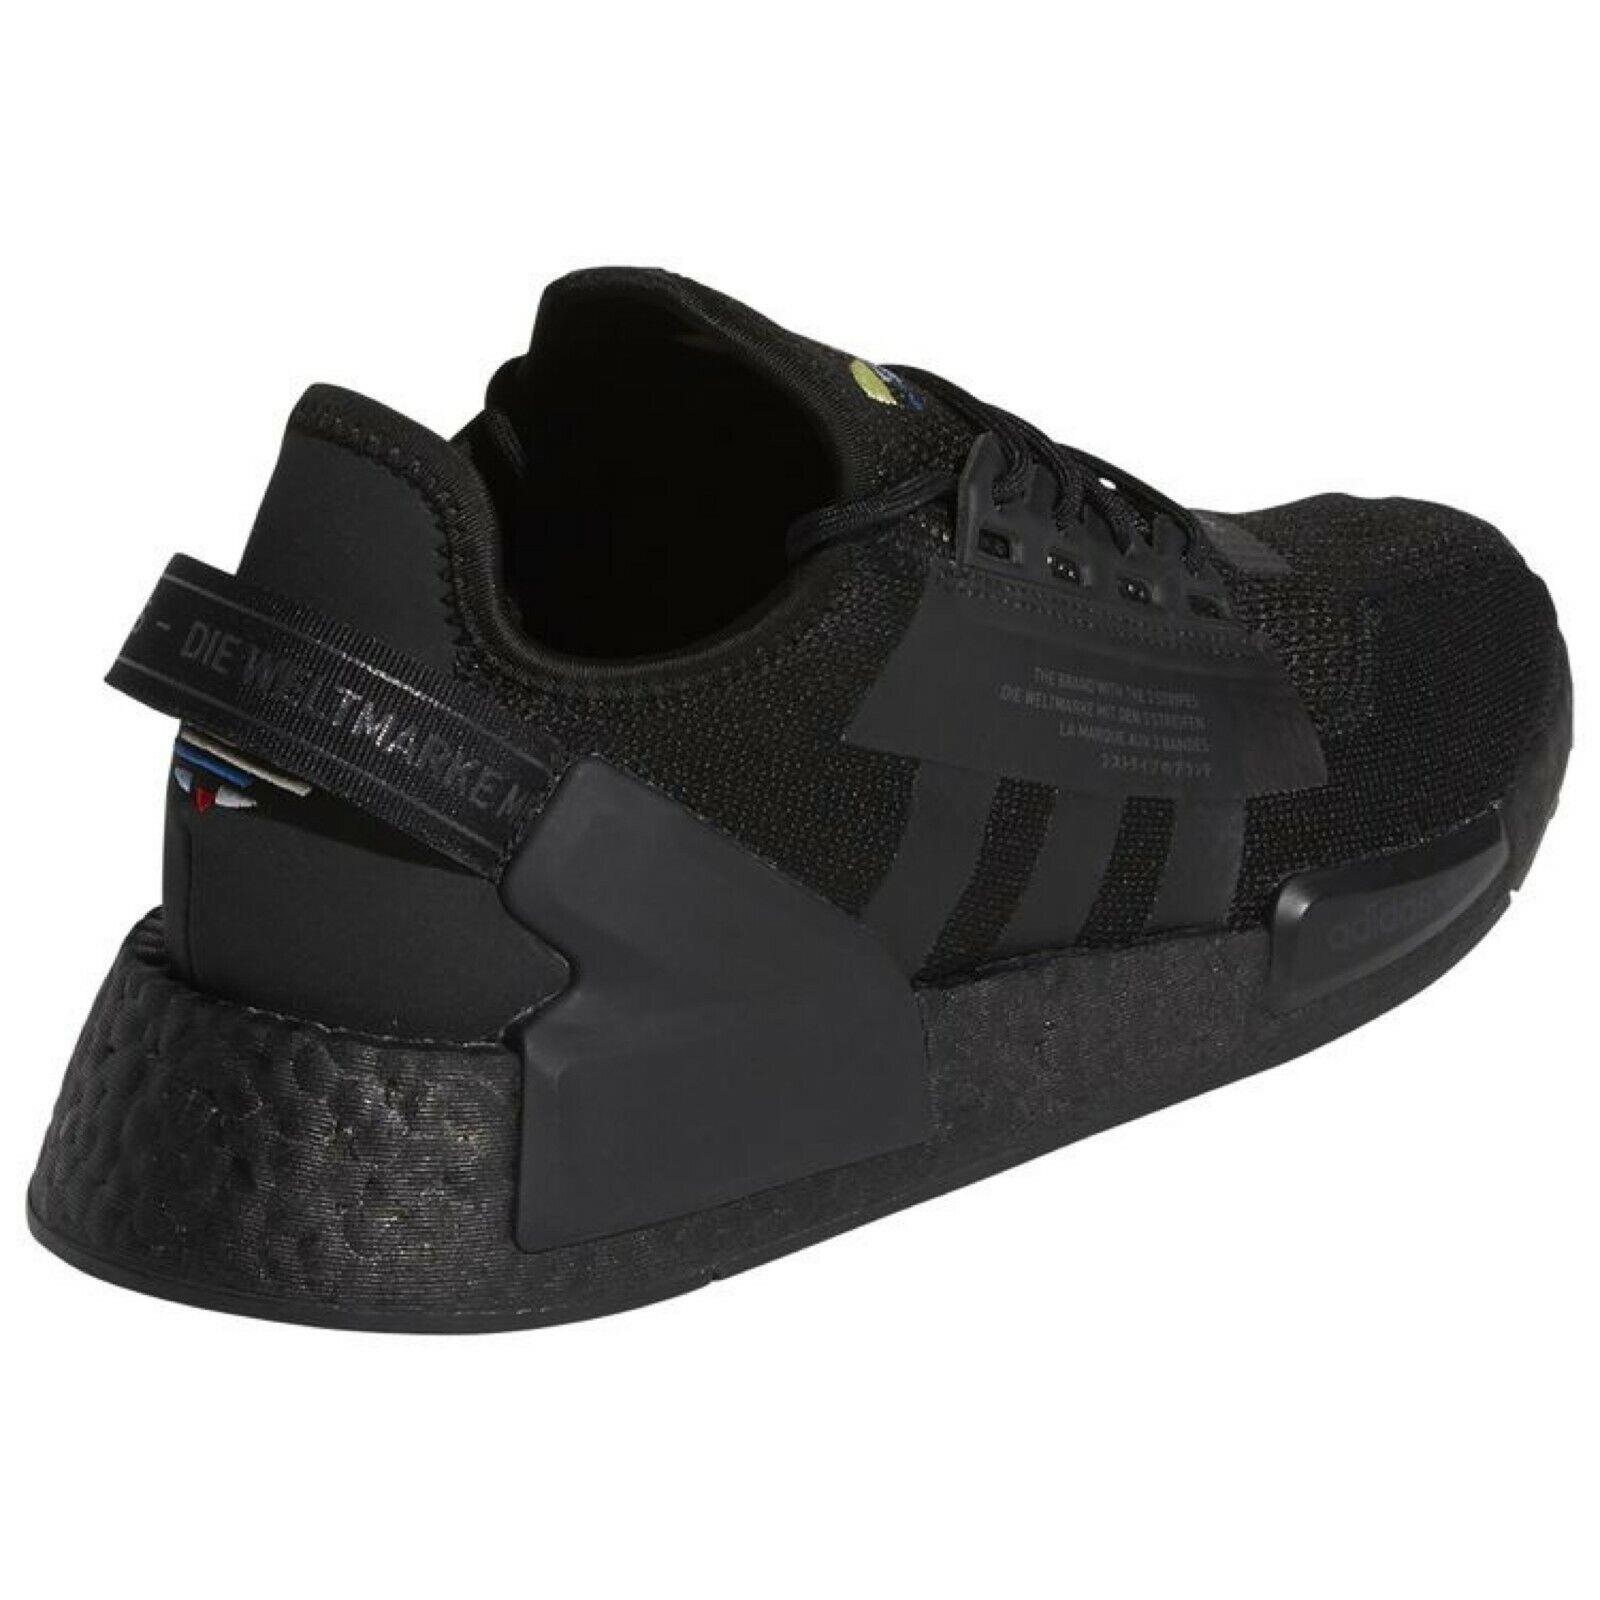 Adidas shoes Originals - Black , Black/Multi Manufacturer 9